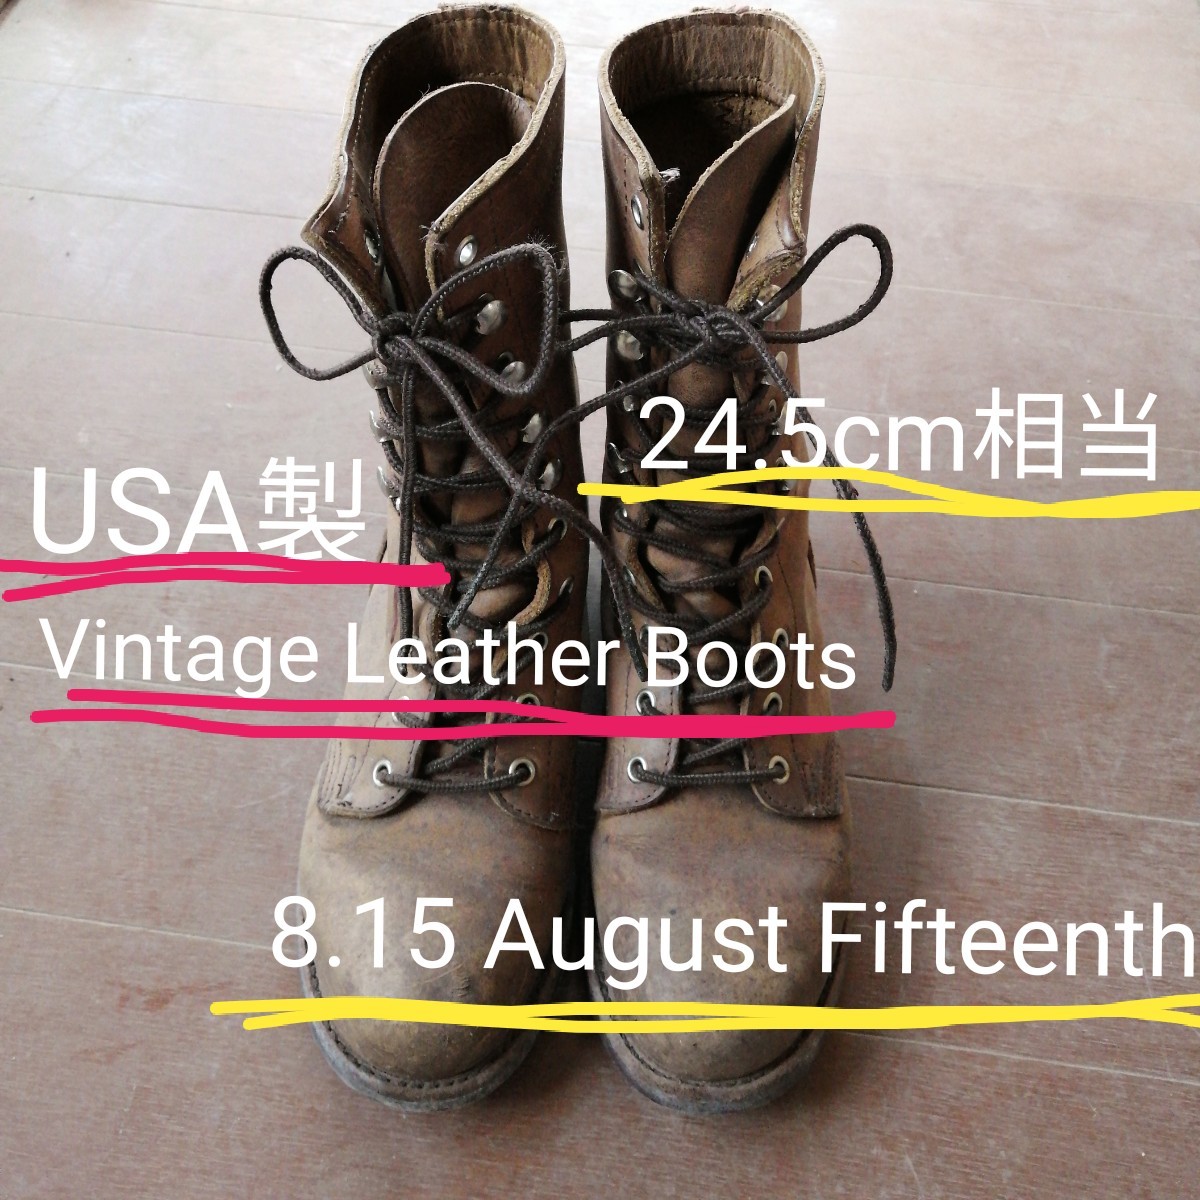 USA製 vintage レディース レザー レースアップ ブーツ 8.15 August Fifteenth